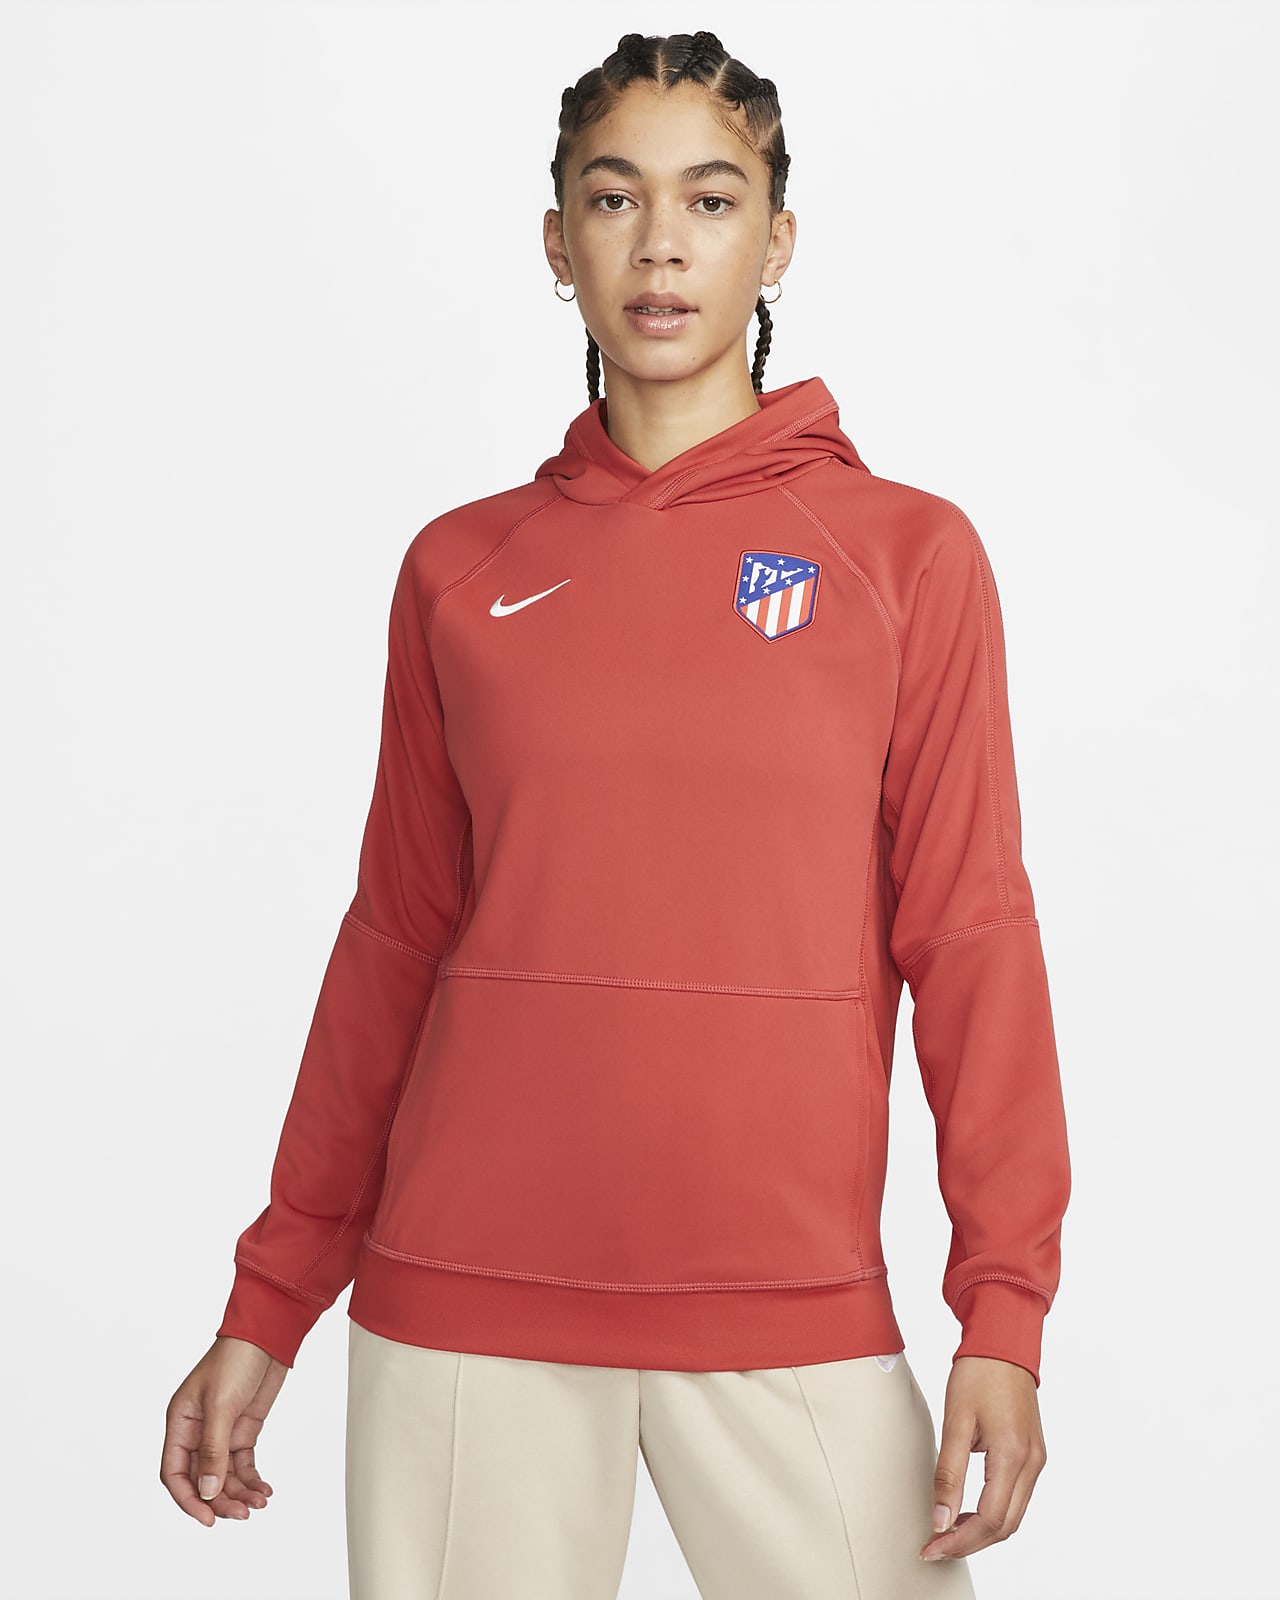 Atlético Madrid Women's Nike Dri-FIT Pullover Hoodie